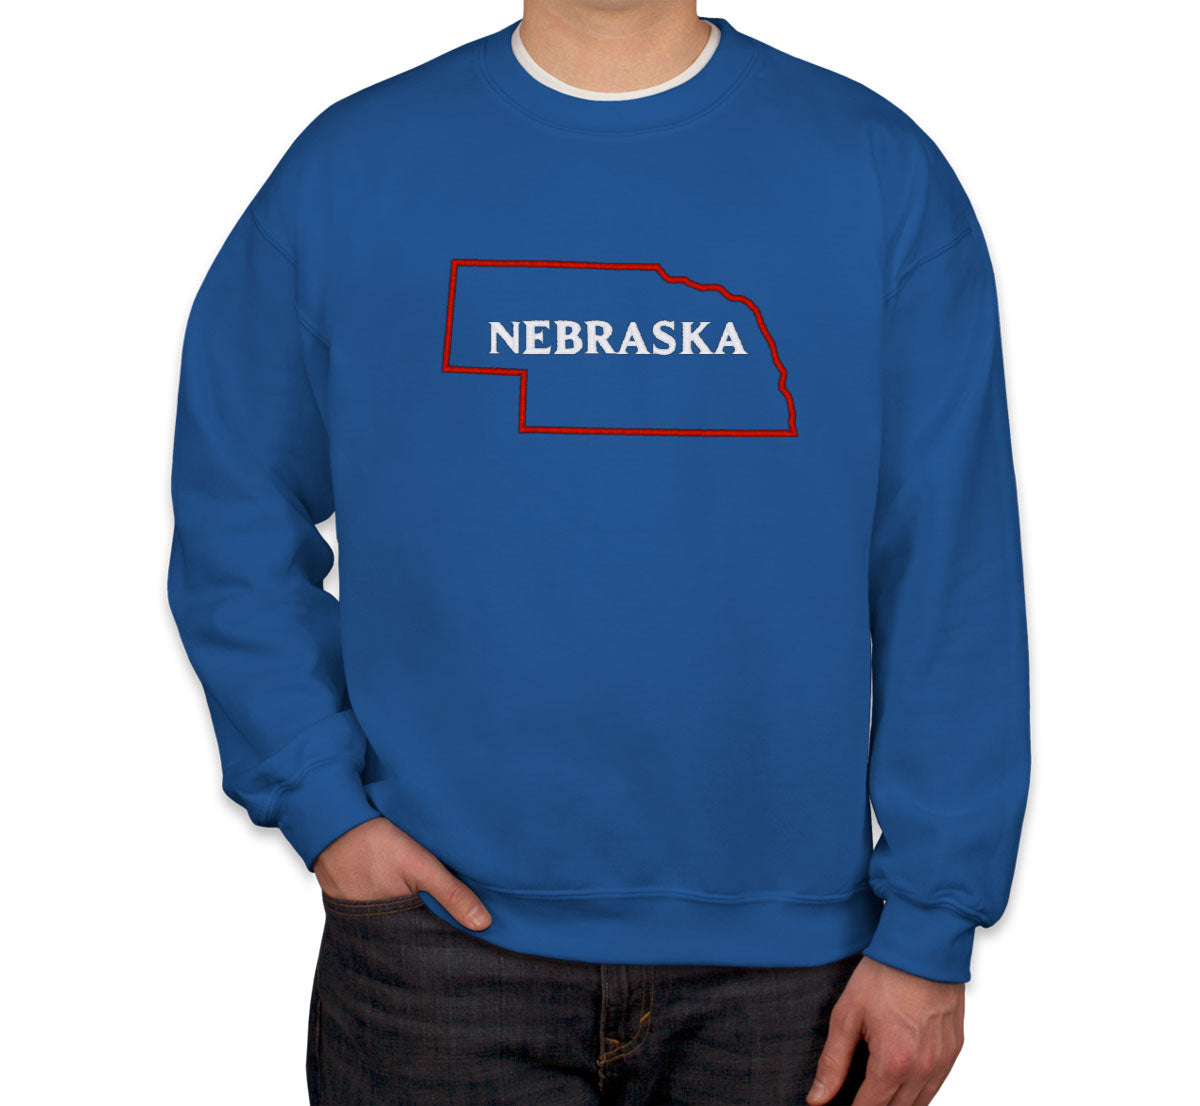 Nebraska Embroidered Unisex Sweatshirt